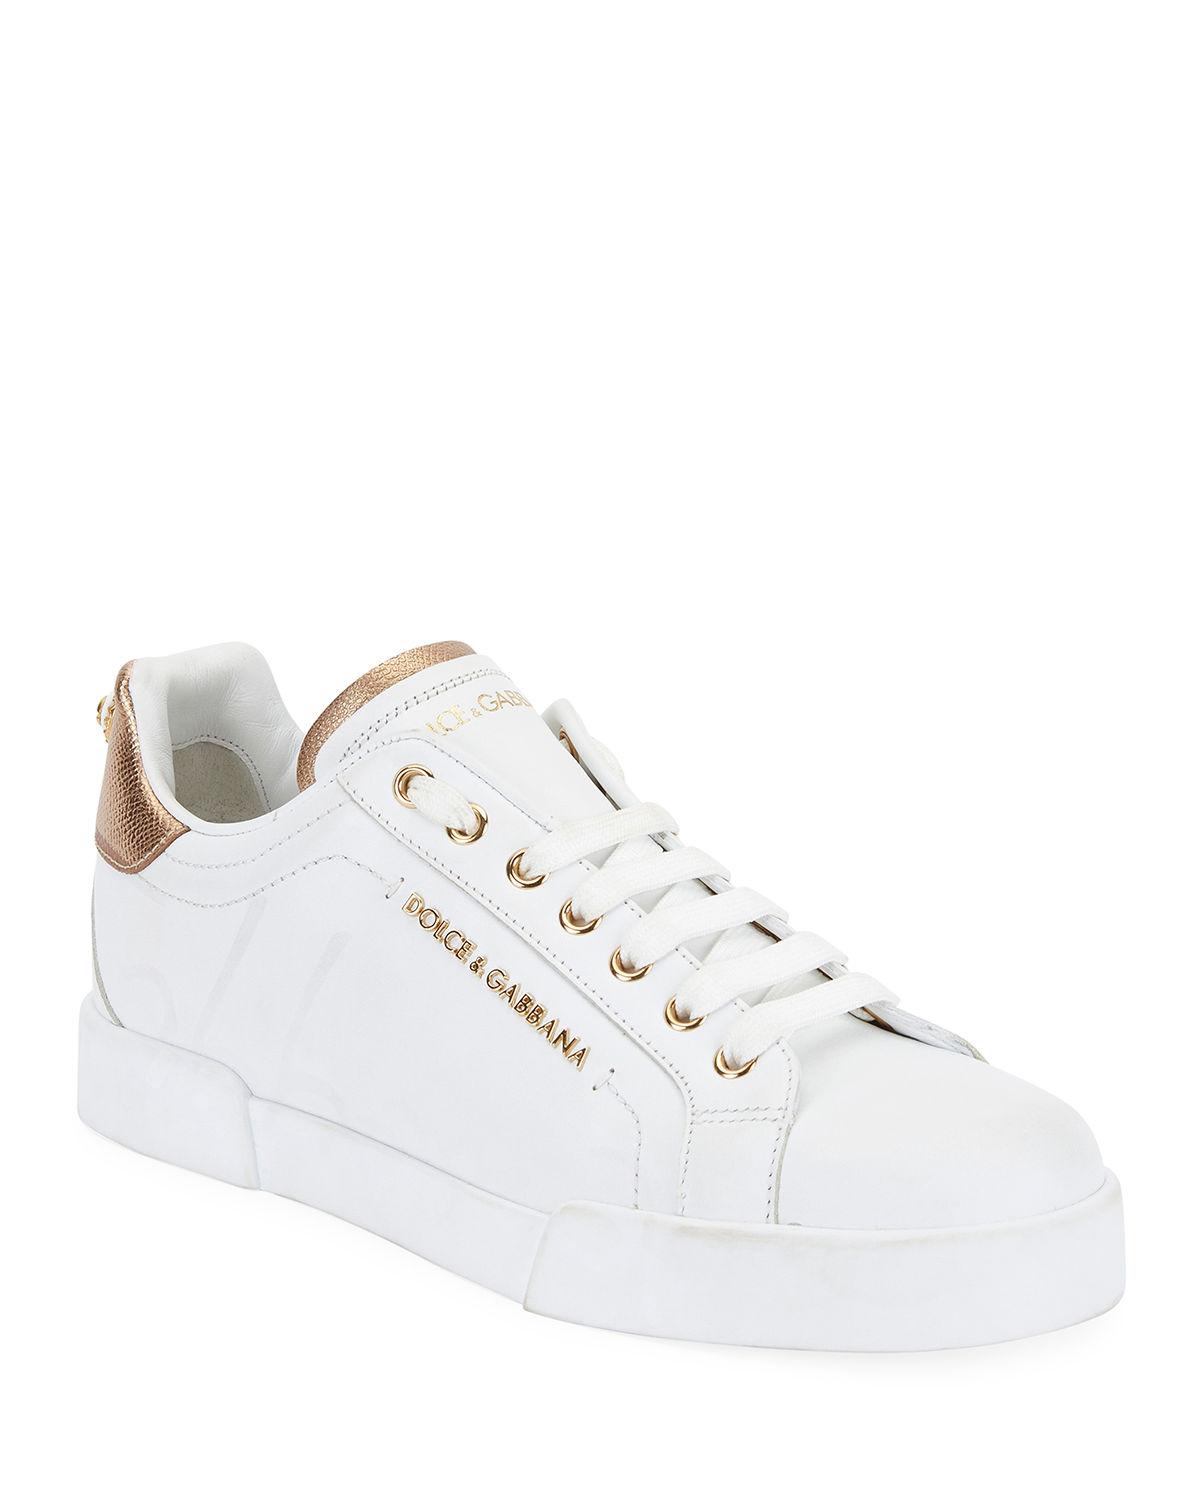 Dolce & Gabbana Portofino Leather Sneakers in White/ Gold (White) - Lyst